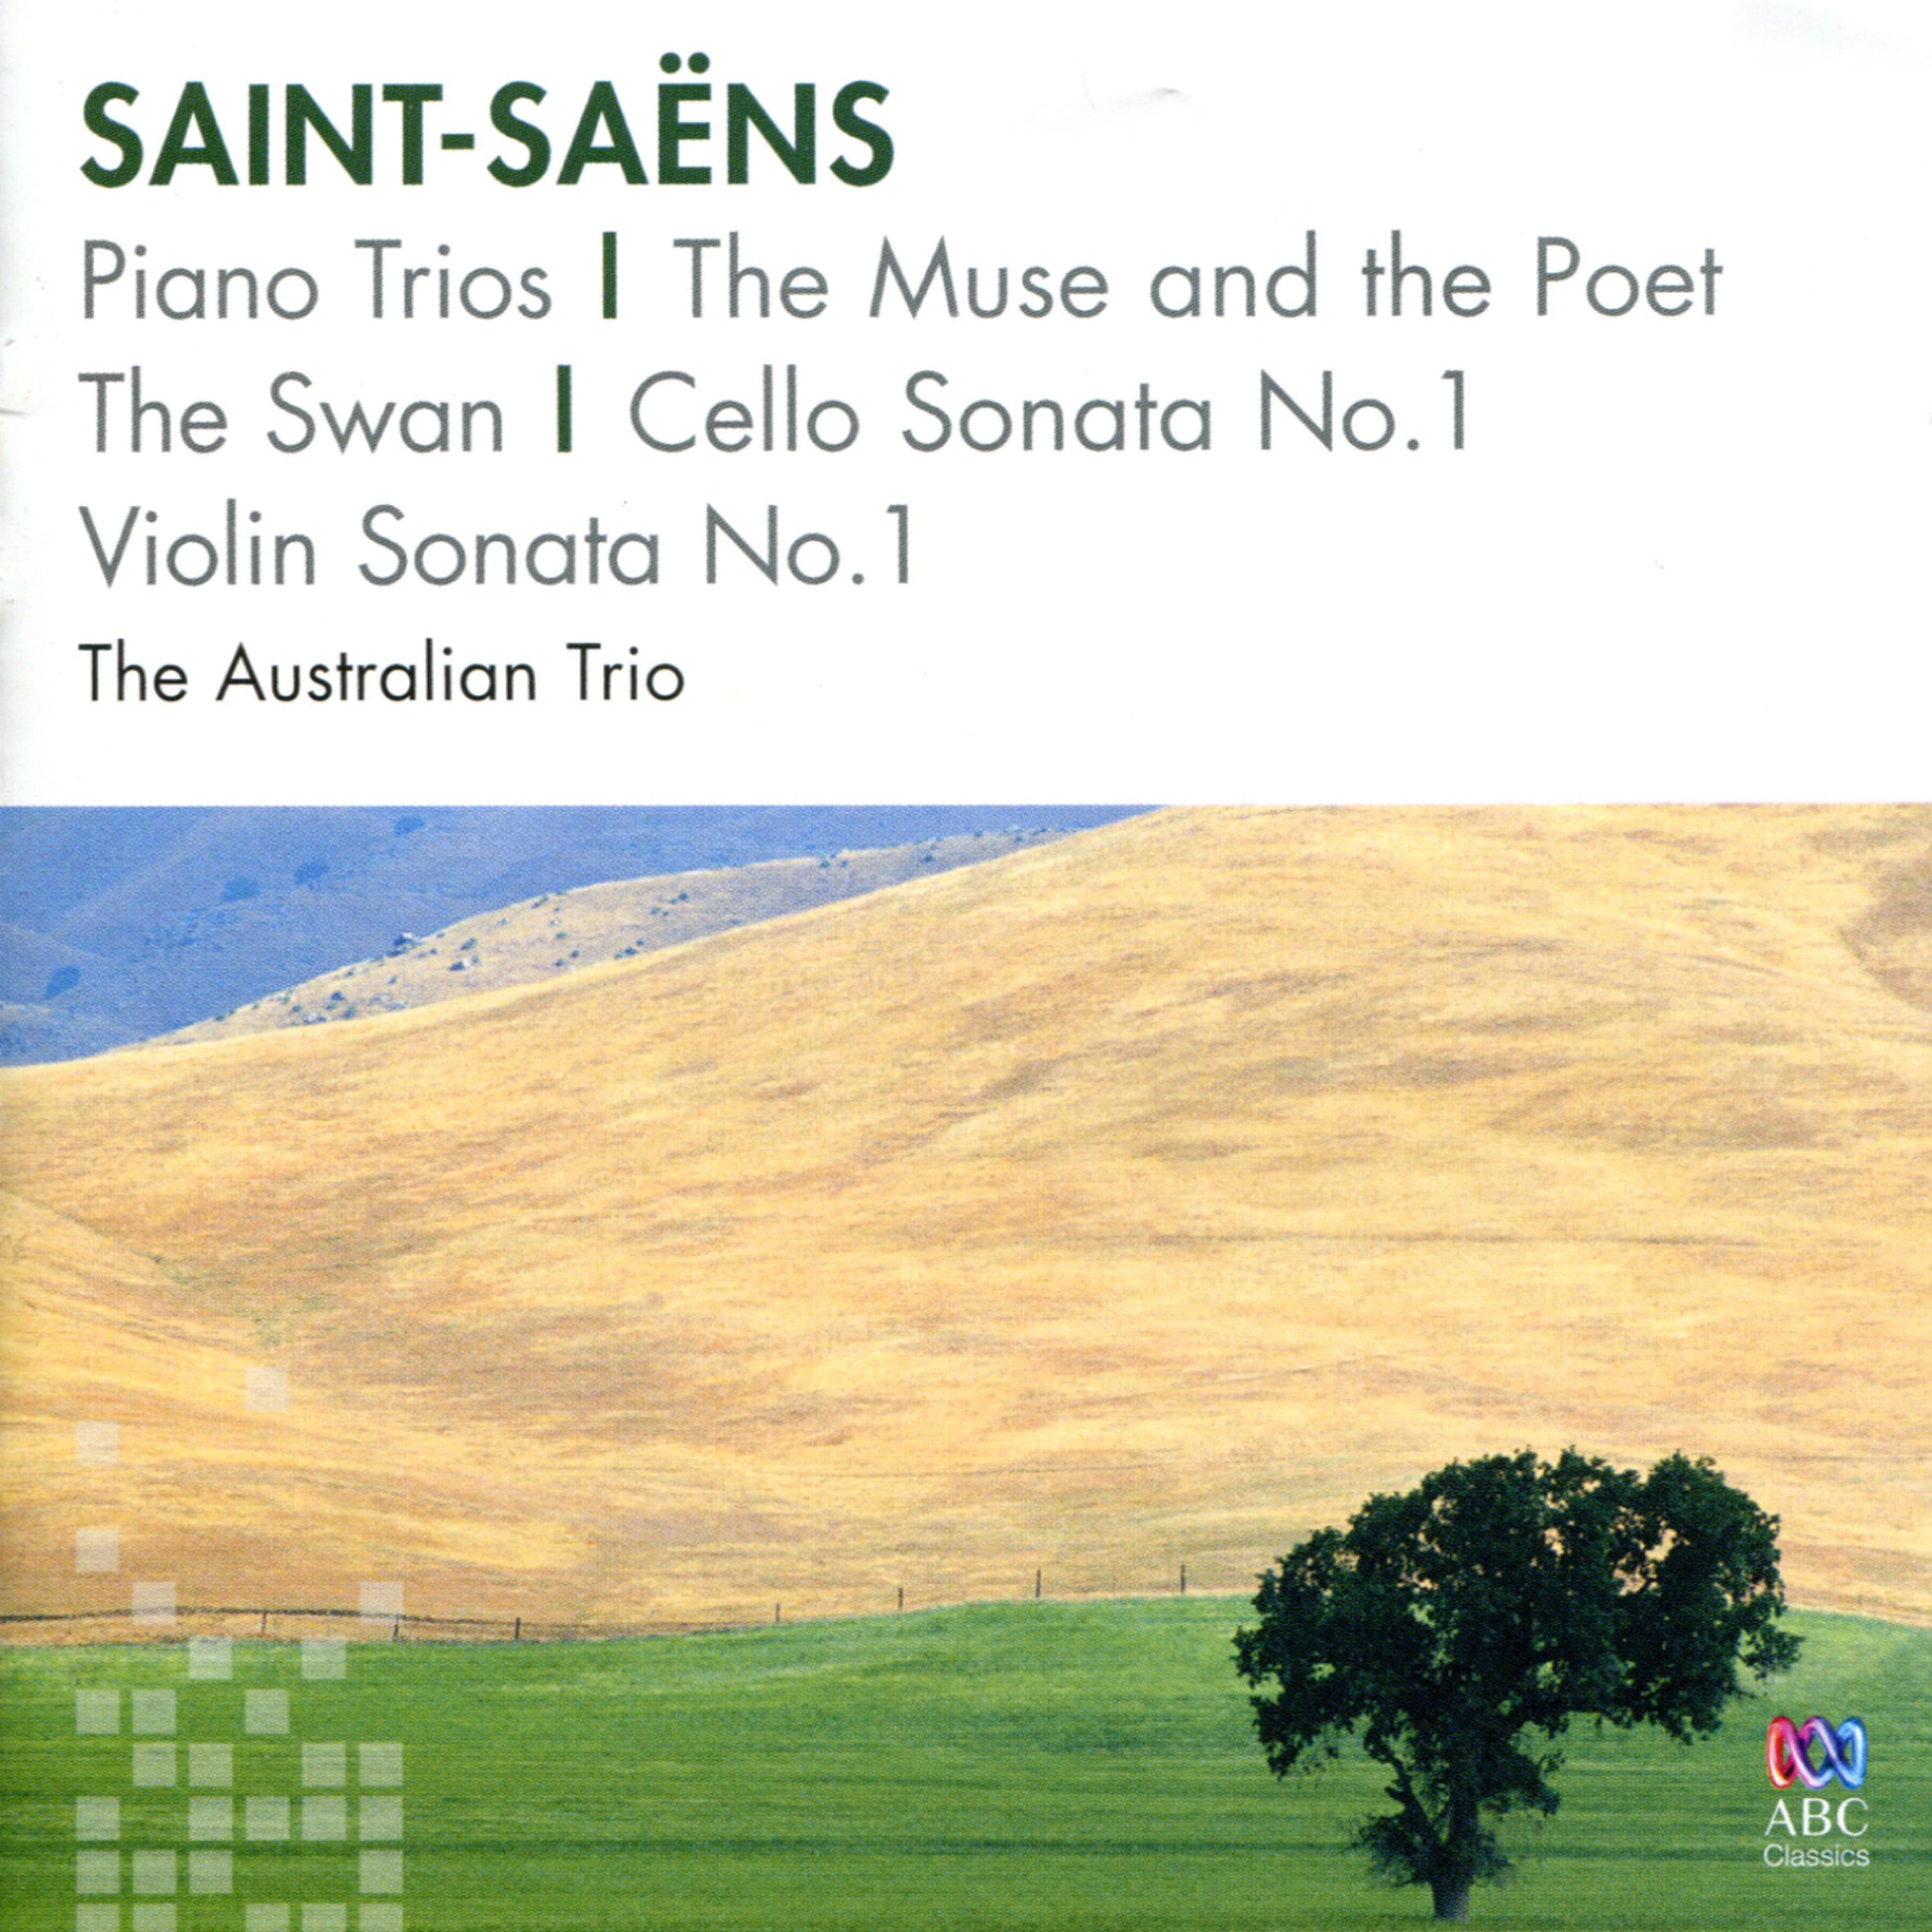 Saint-Saens - Complete Piano Trios